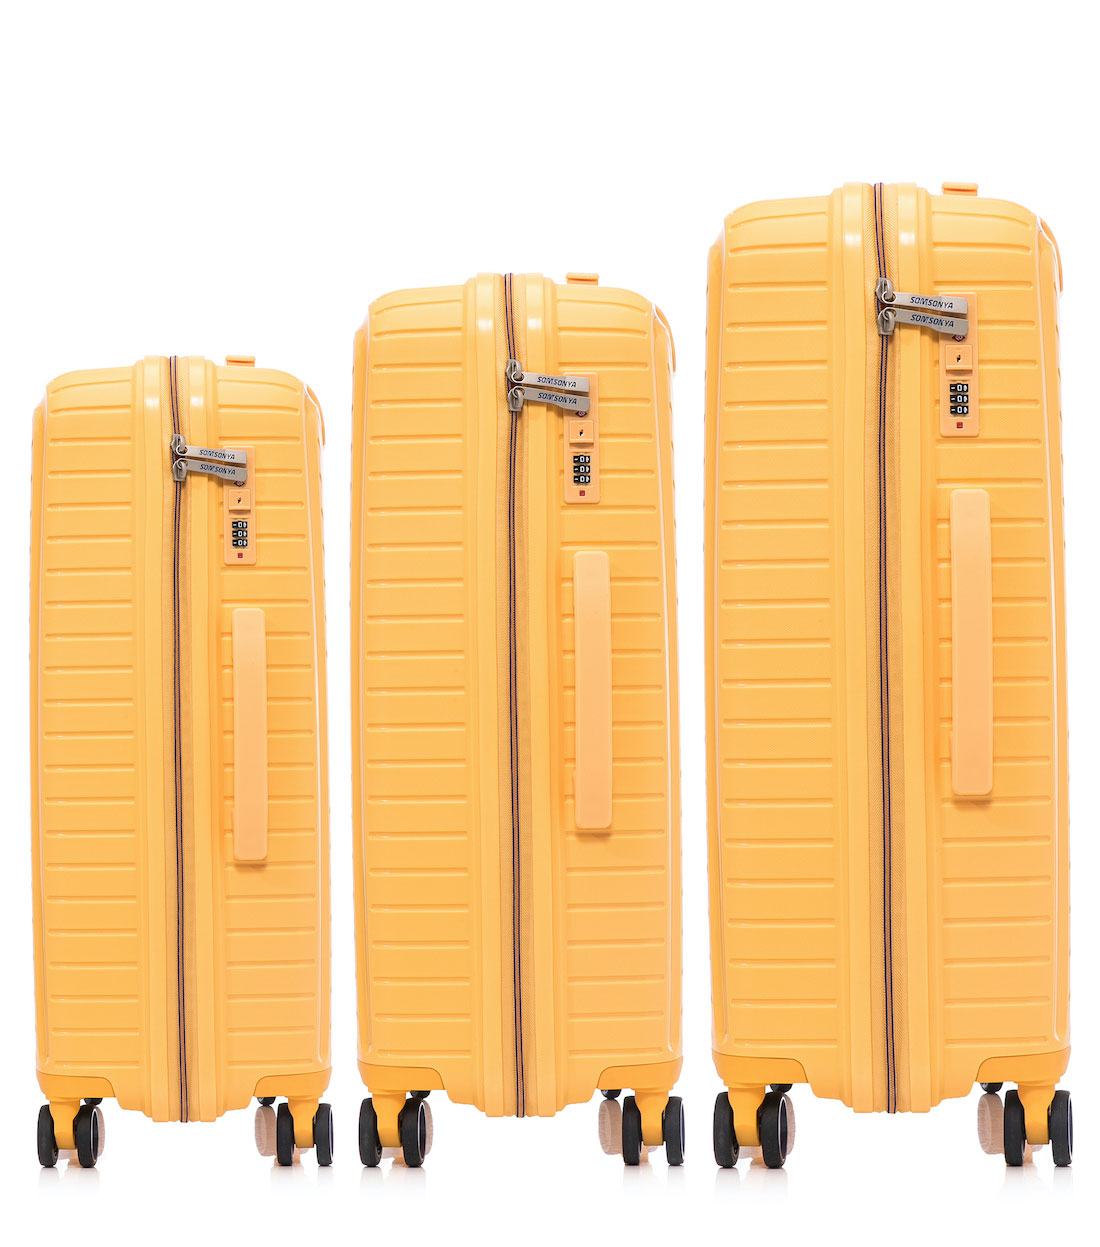 Большой чемодан Somsonya PP Cairo L (76 см) Yellow